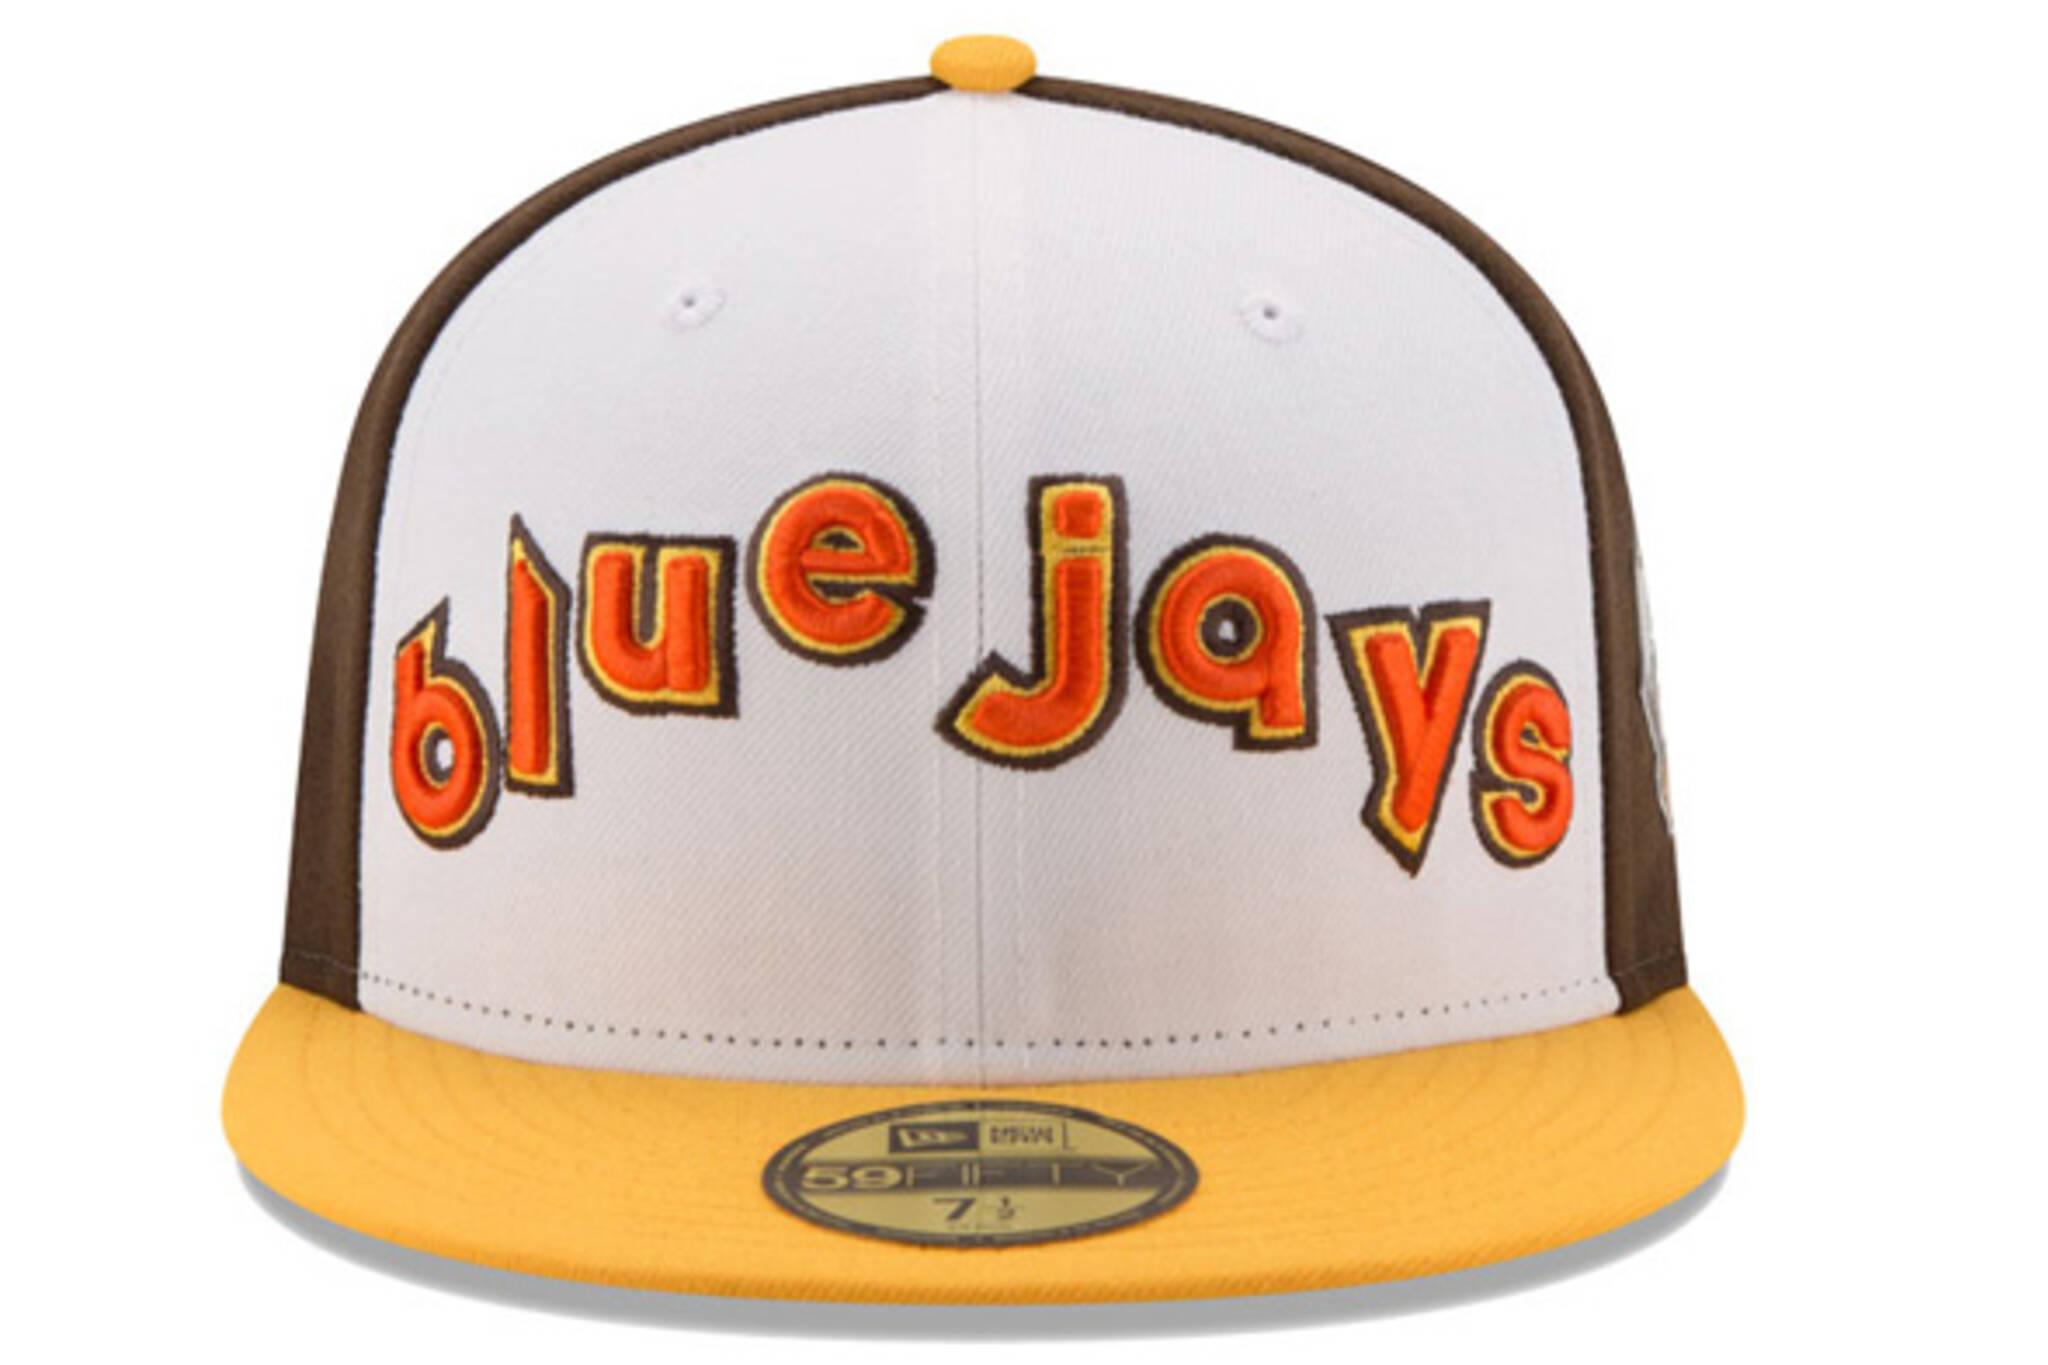 The Toronto Blue Jays get six new hat designs